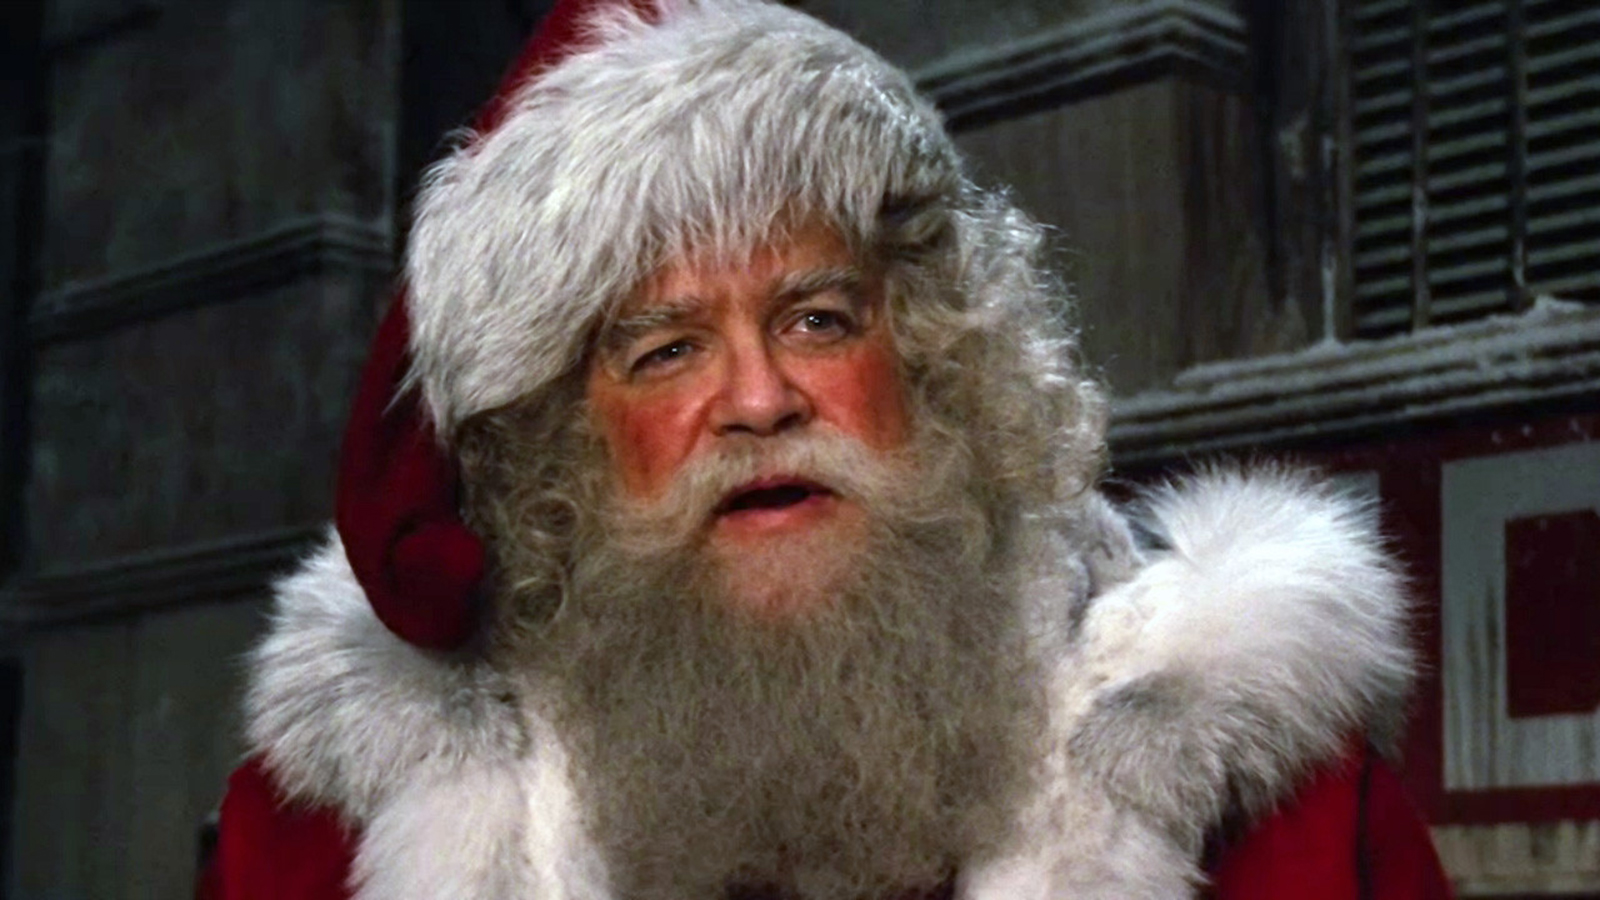 Santa Claus The Movie *** (1985, Dudley Moore, John Lithgow, David